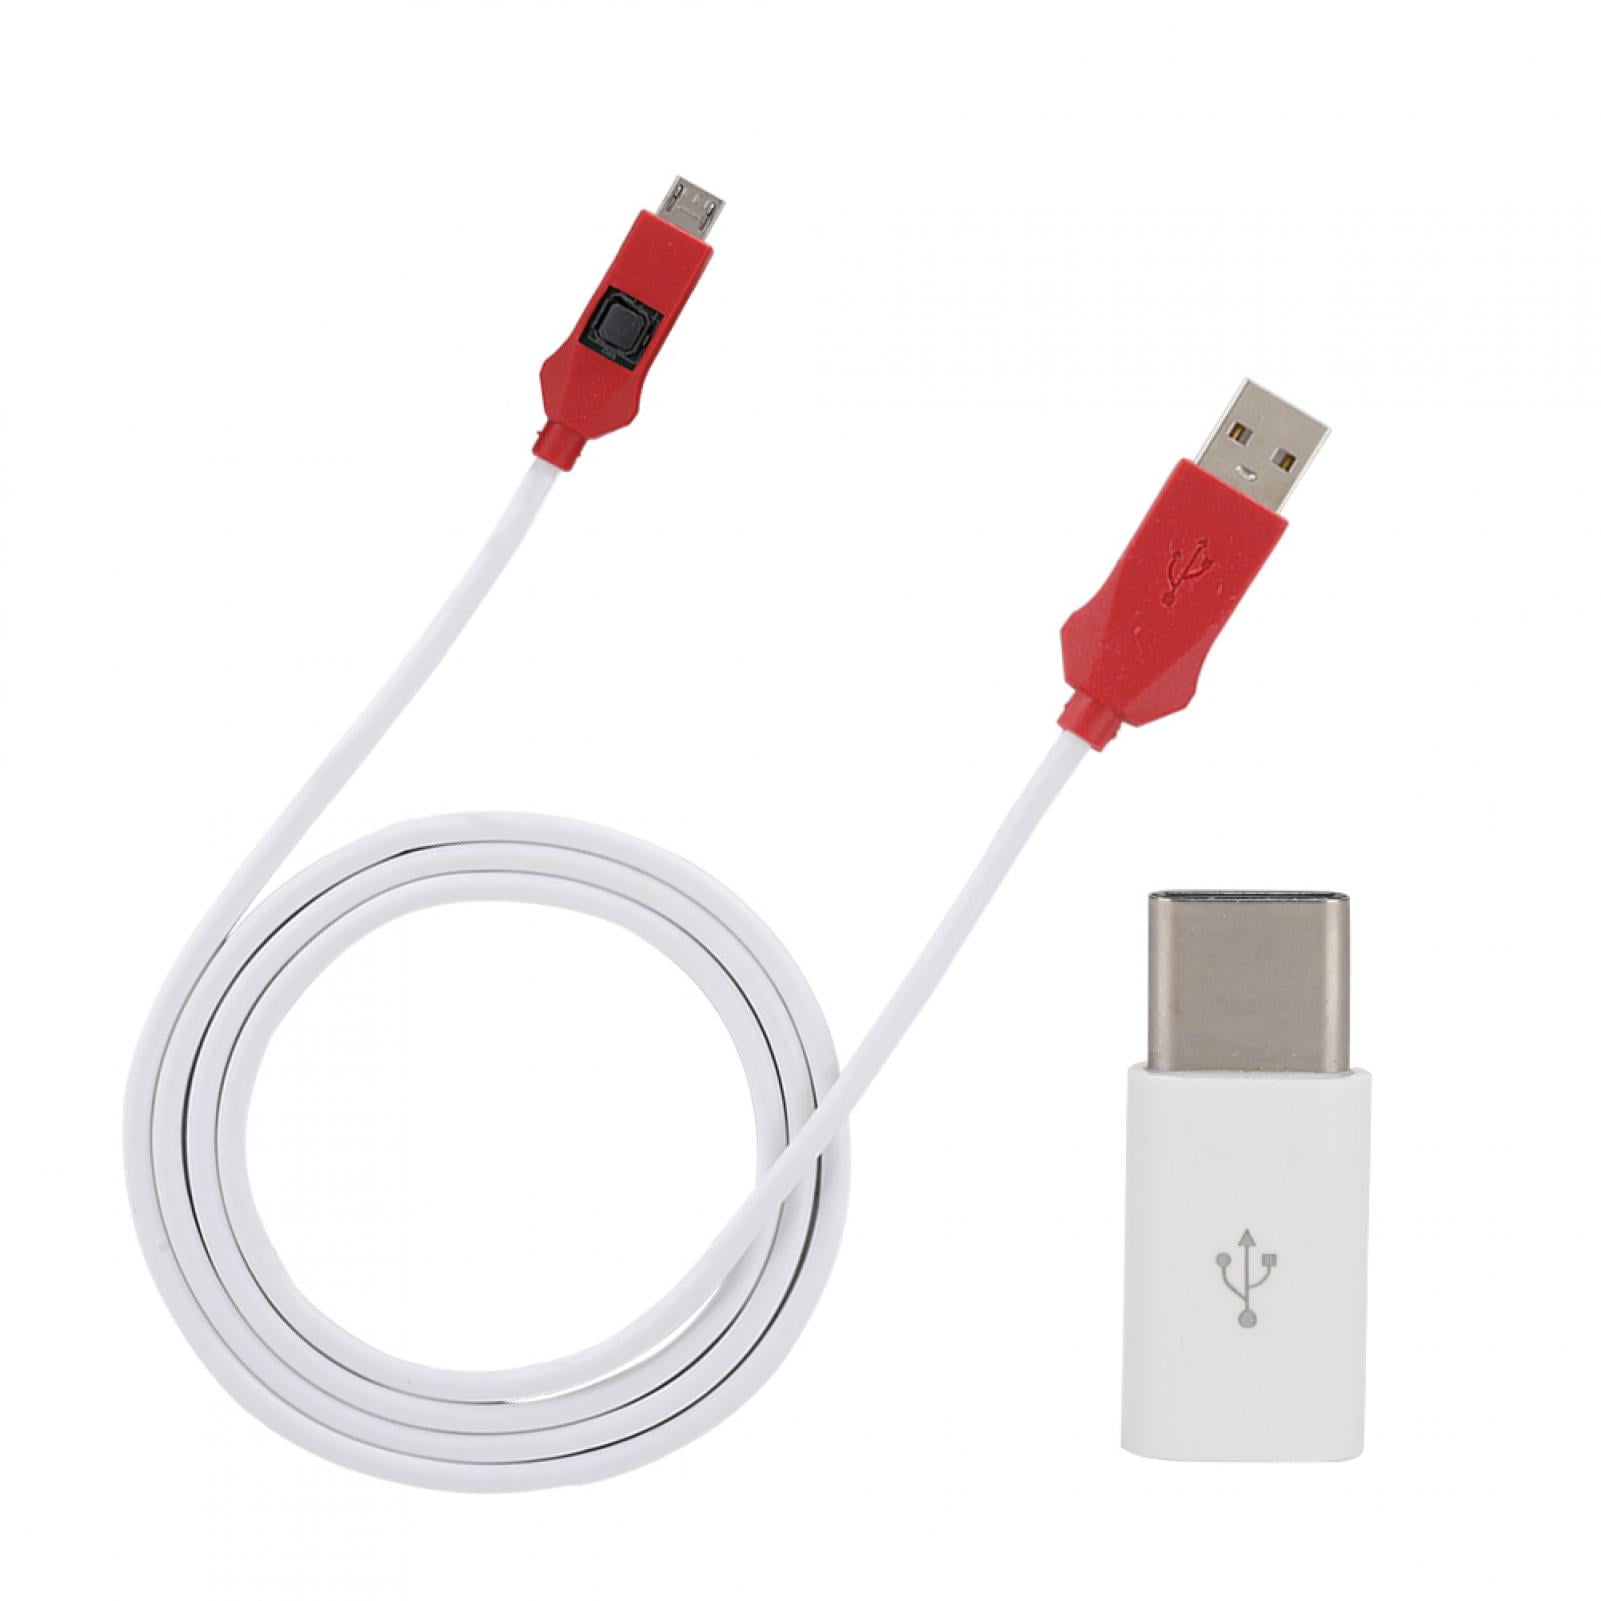 Flash кабель. Кабель Xiaomi 6a USB- Type-c. EDL кабель Micro. Deep Flash Cable Xiaomi. Кабель Xiaomi Type c sjx14zm.